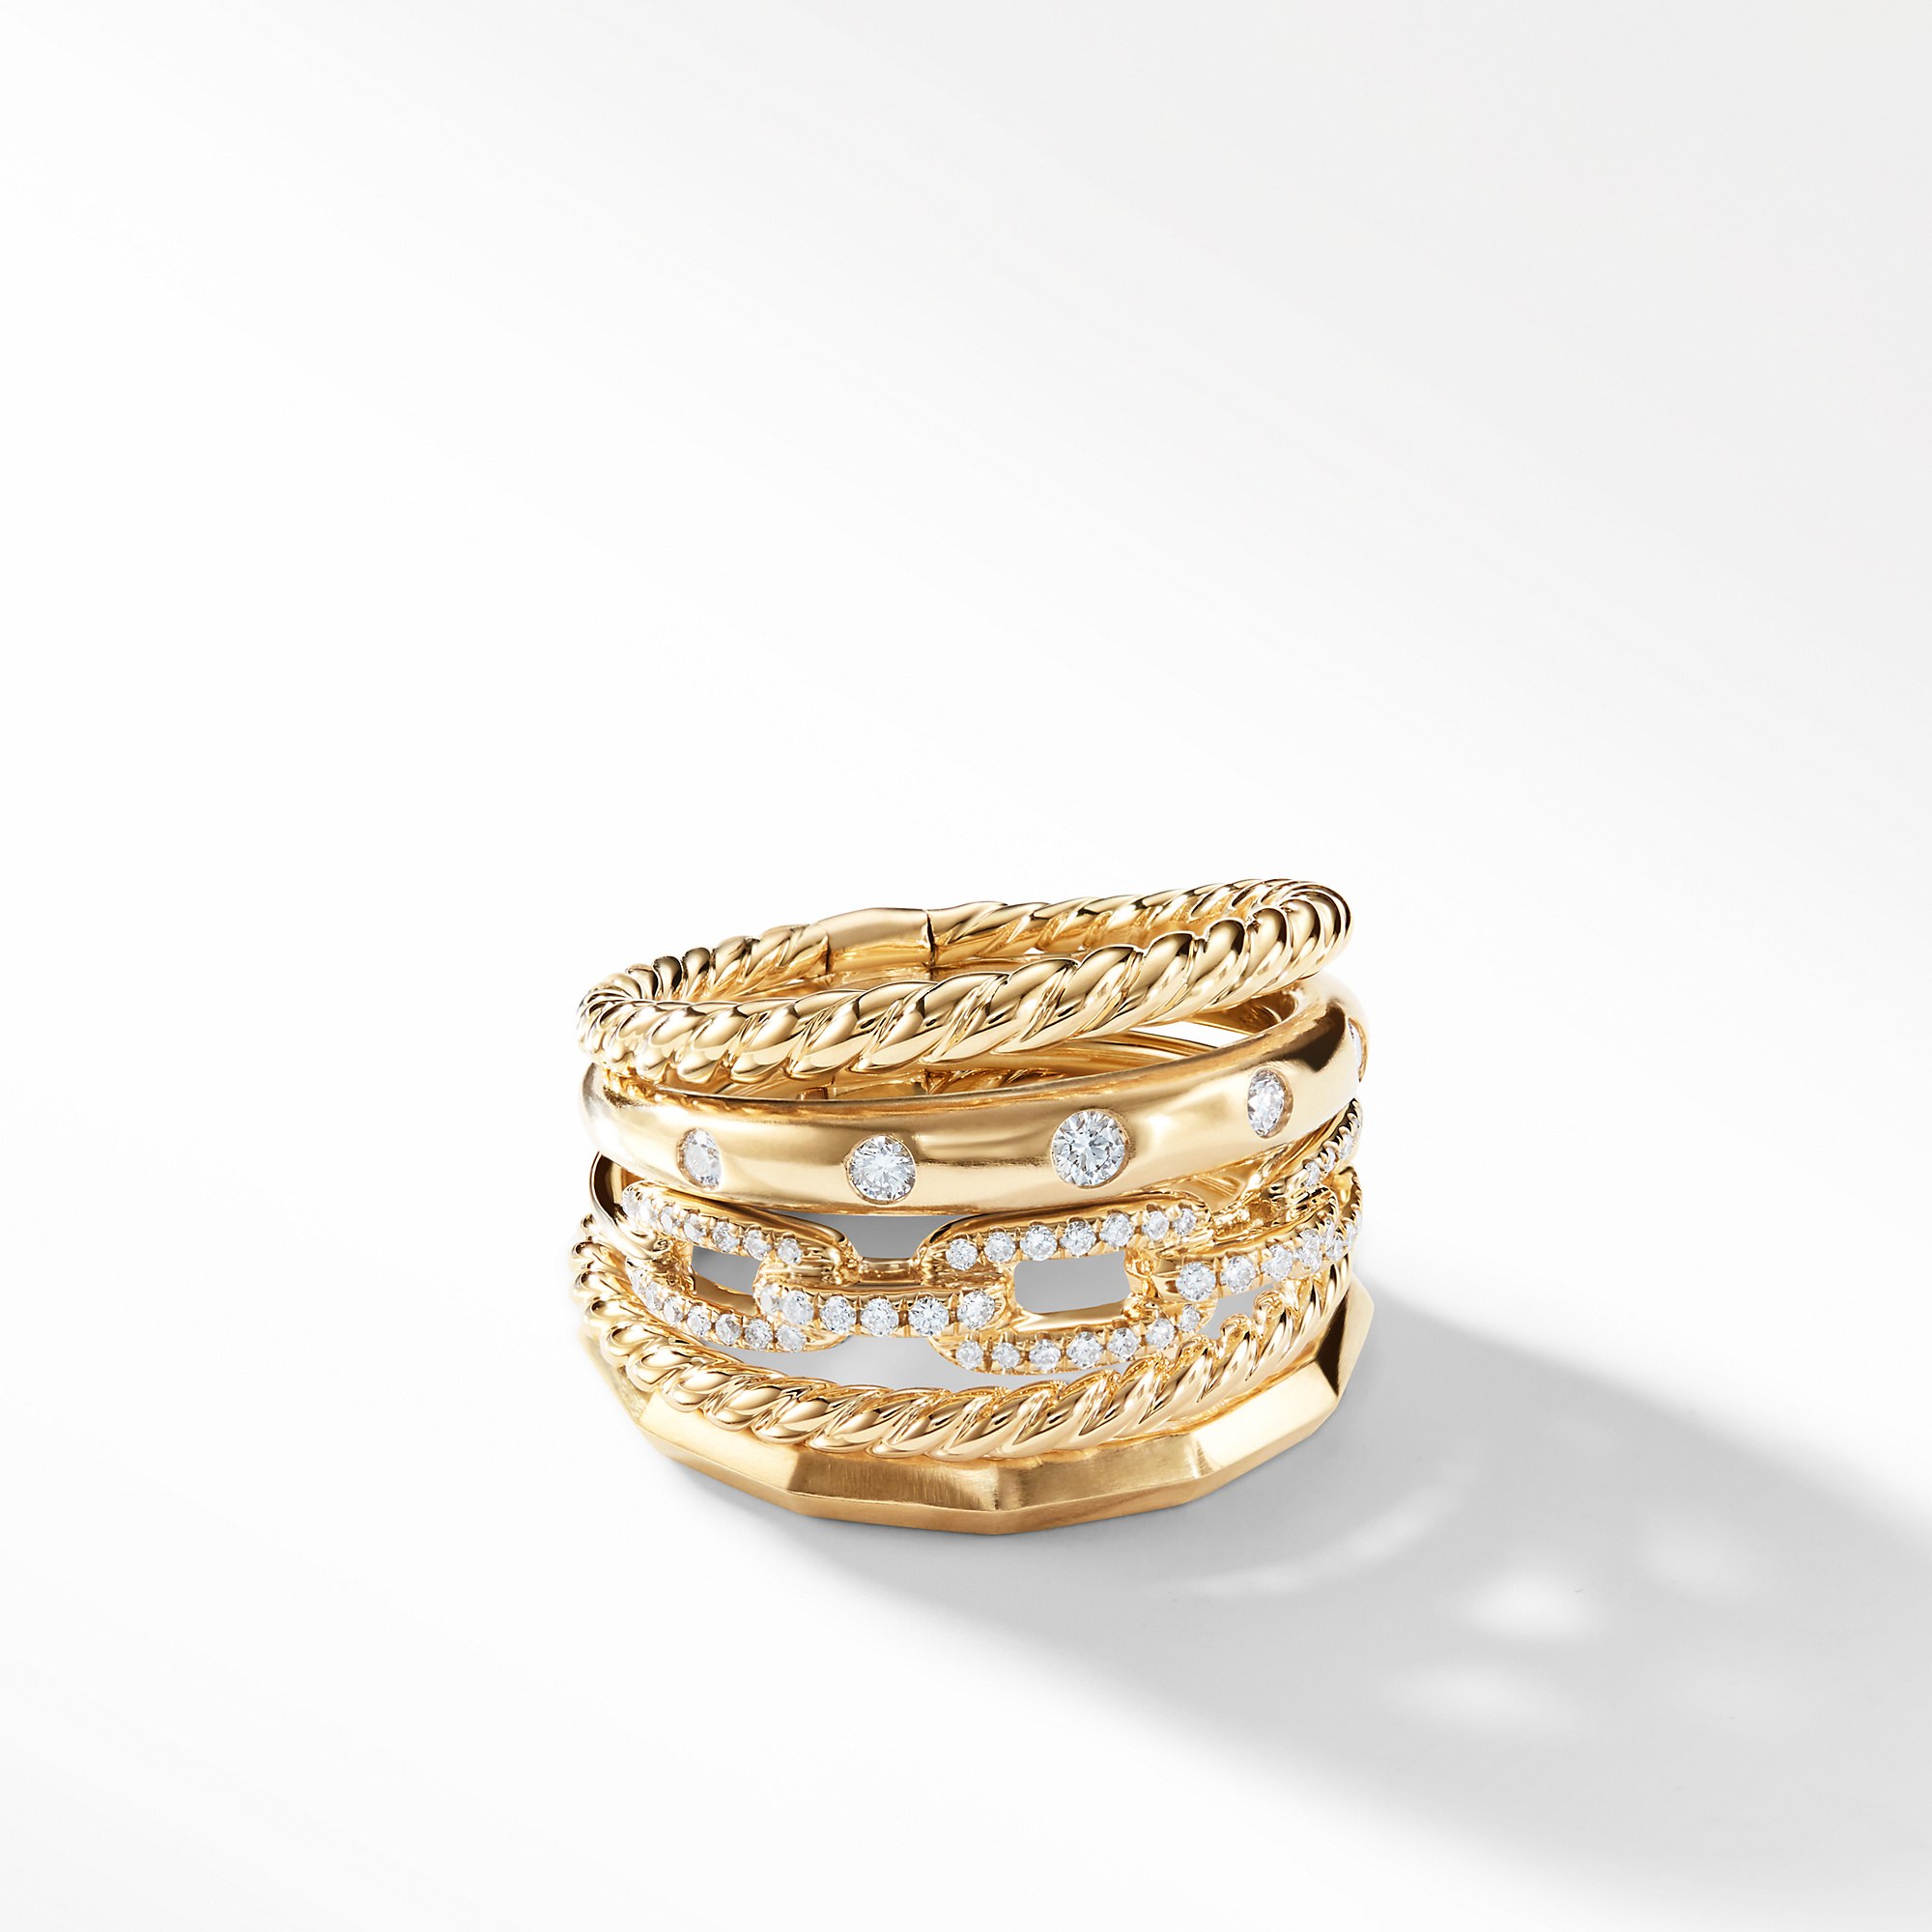 David Yurman Stax Wide Ring with Diamonds in 18K Gold, 15mm 0